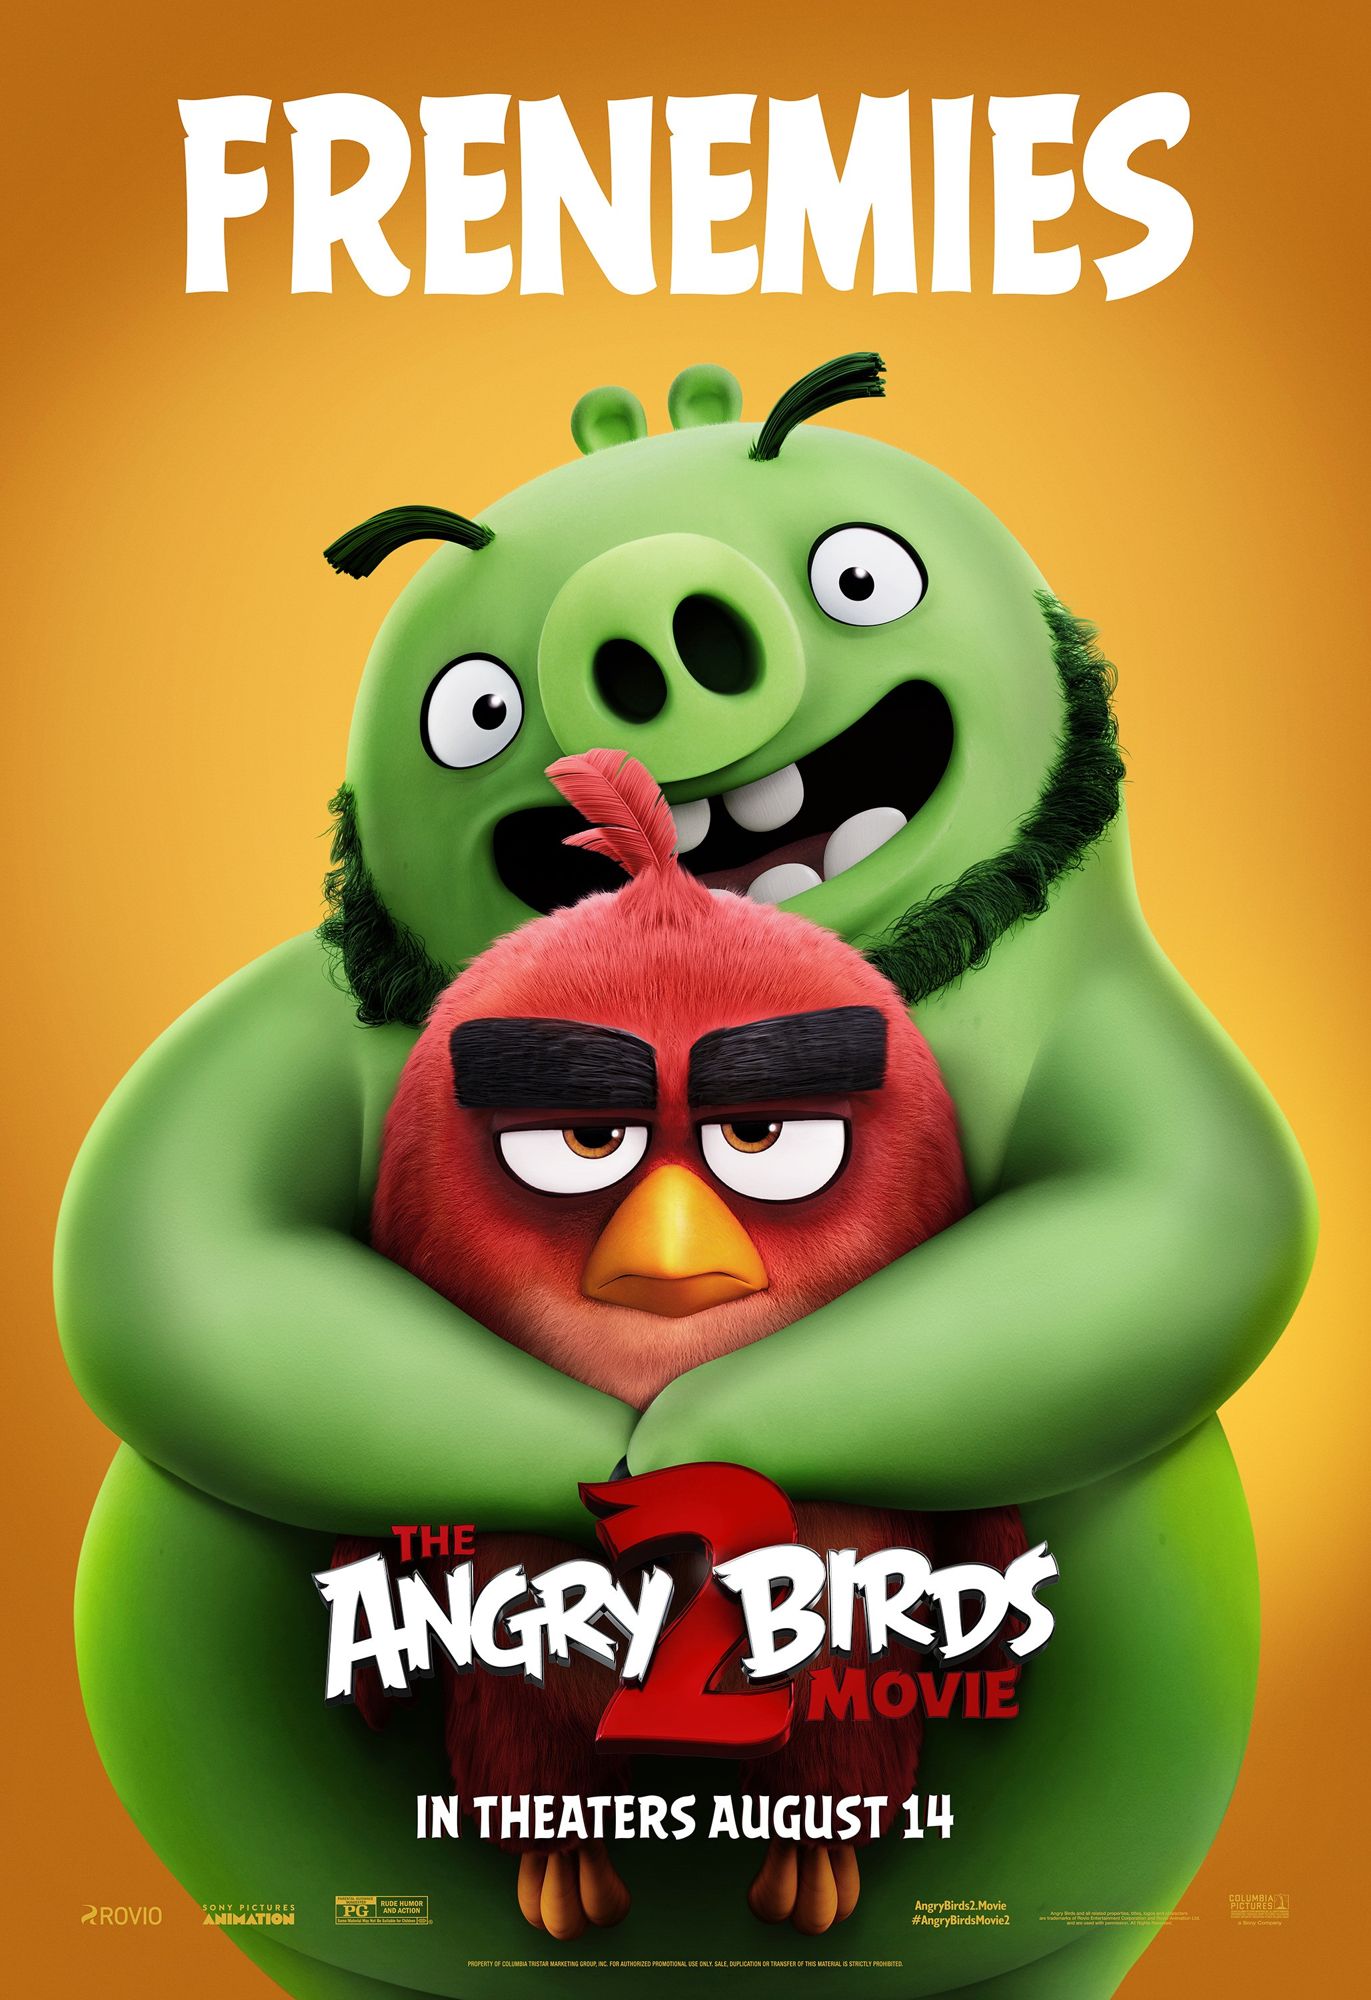 angry birds 2 movie soundtrack